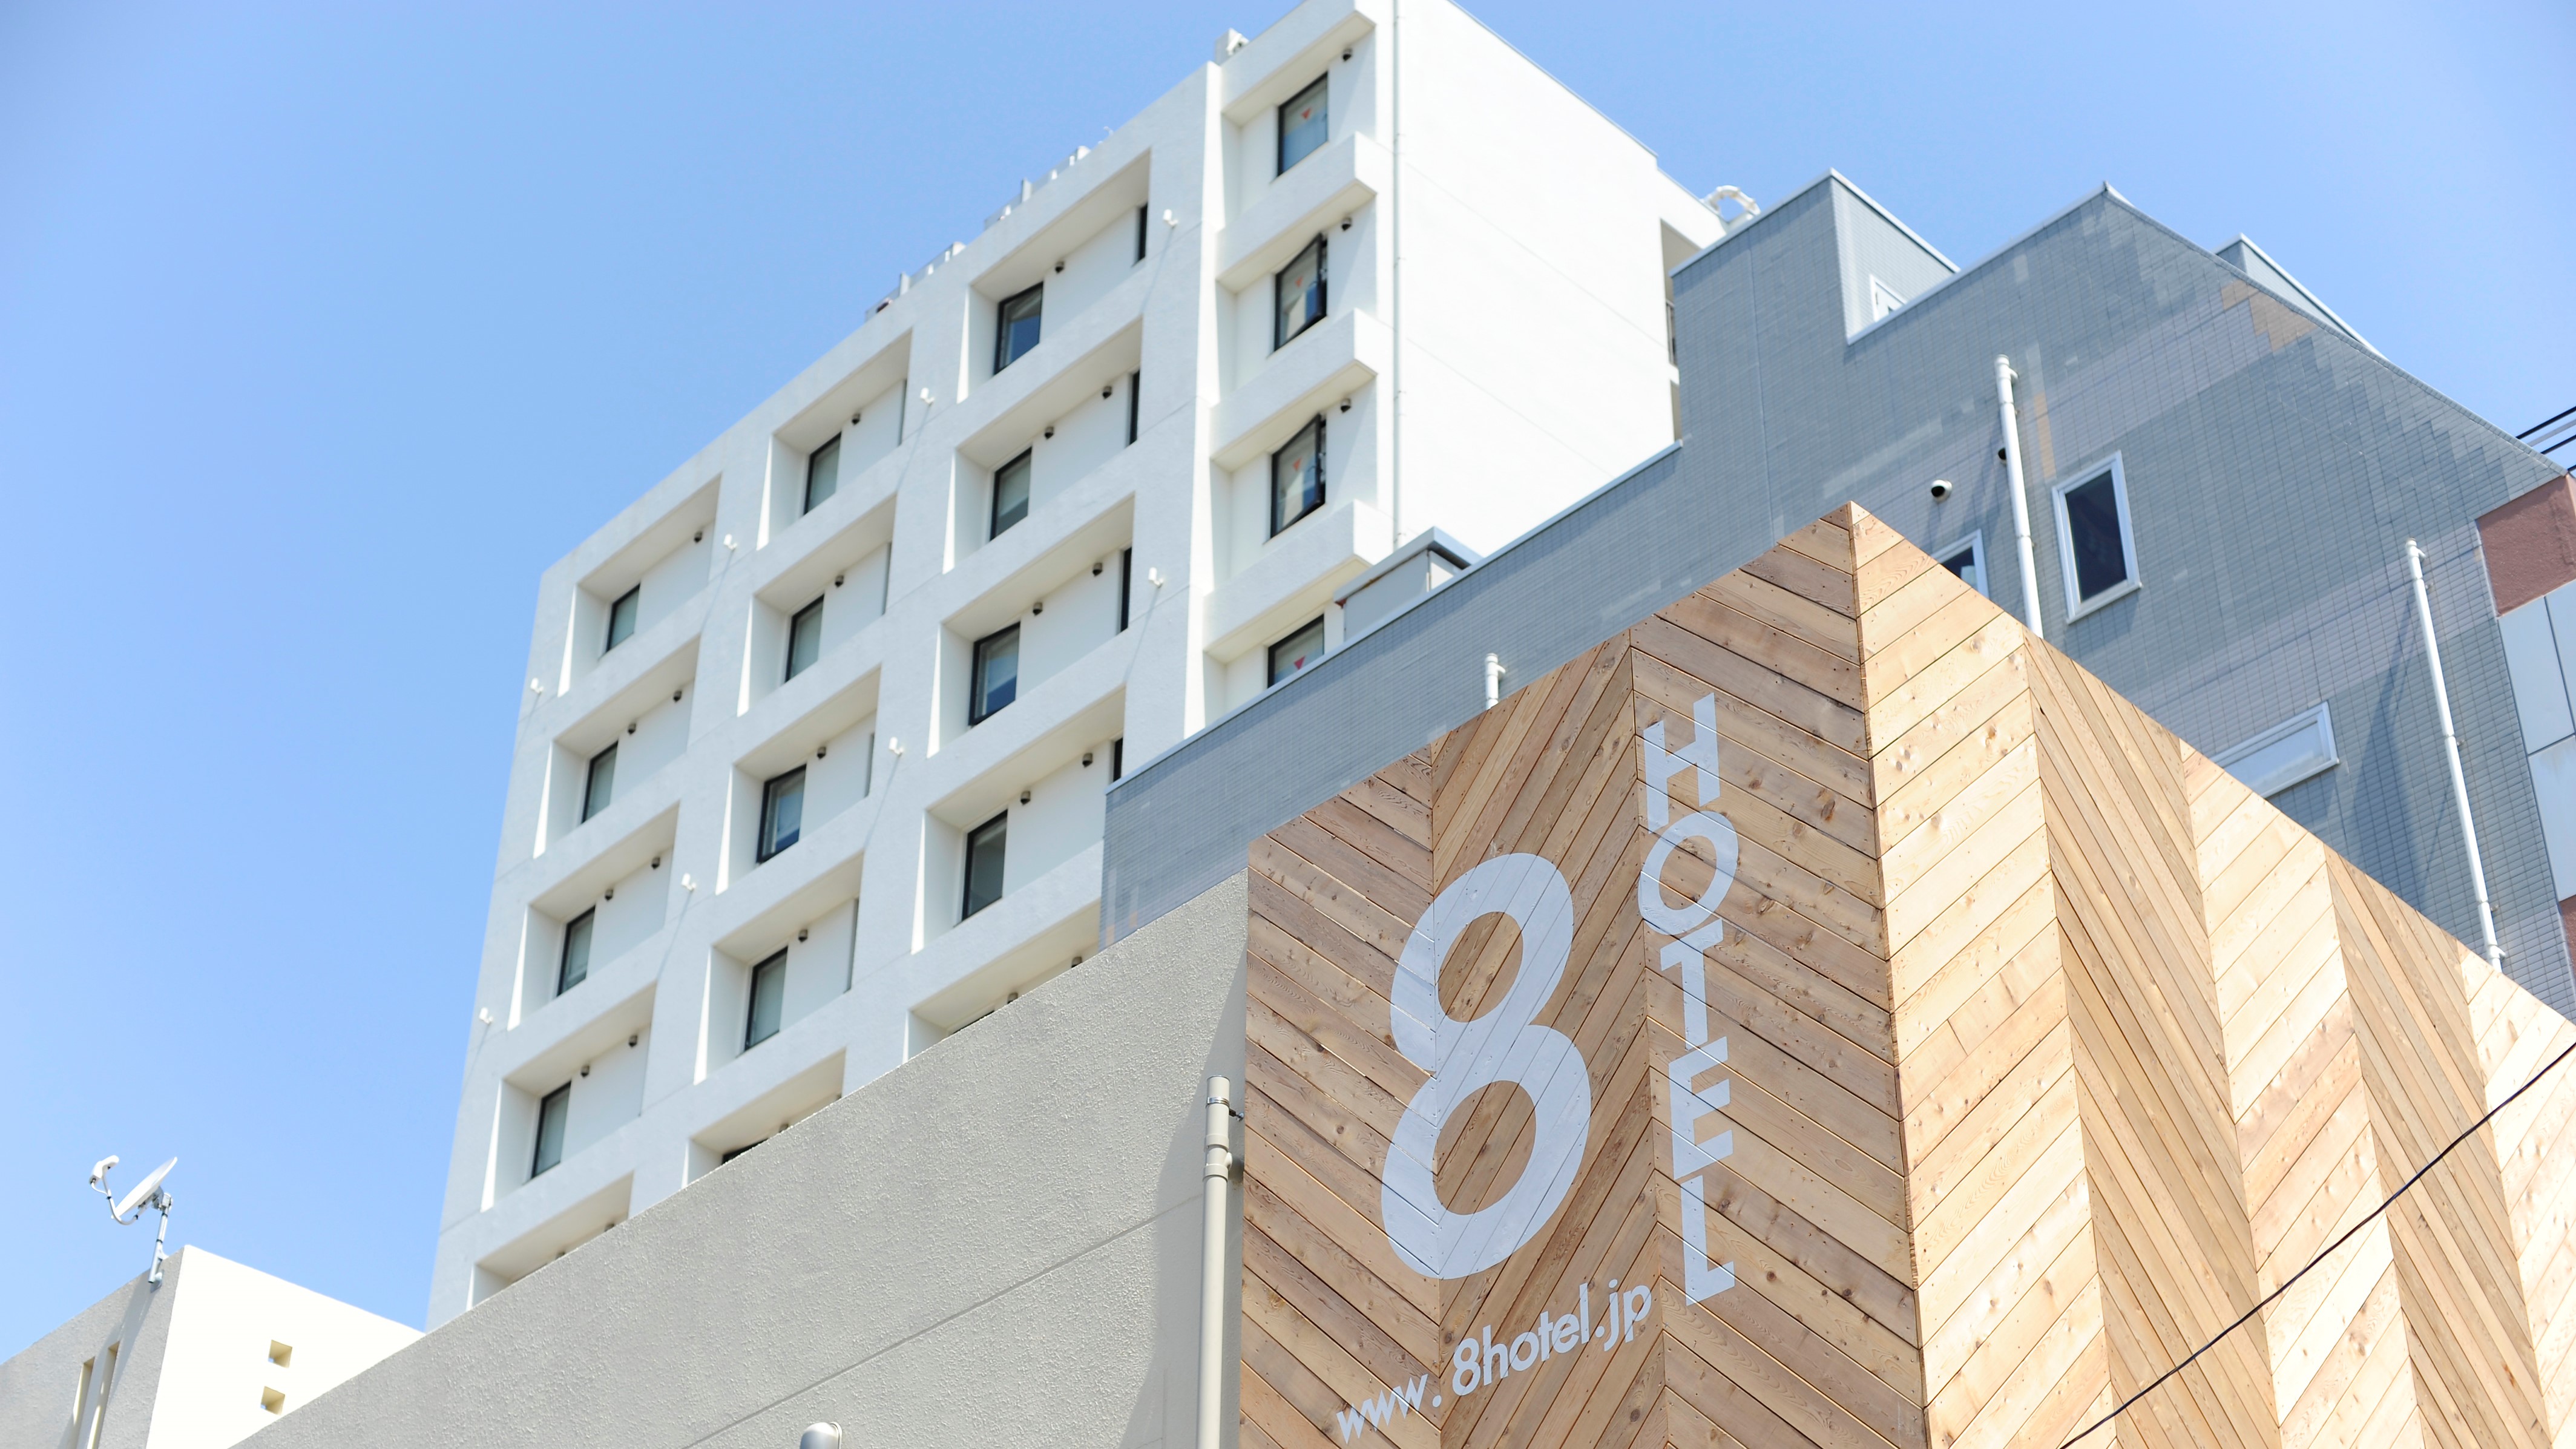 8 Hotel Shonan Fujisawa